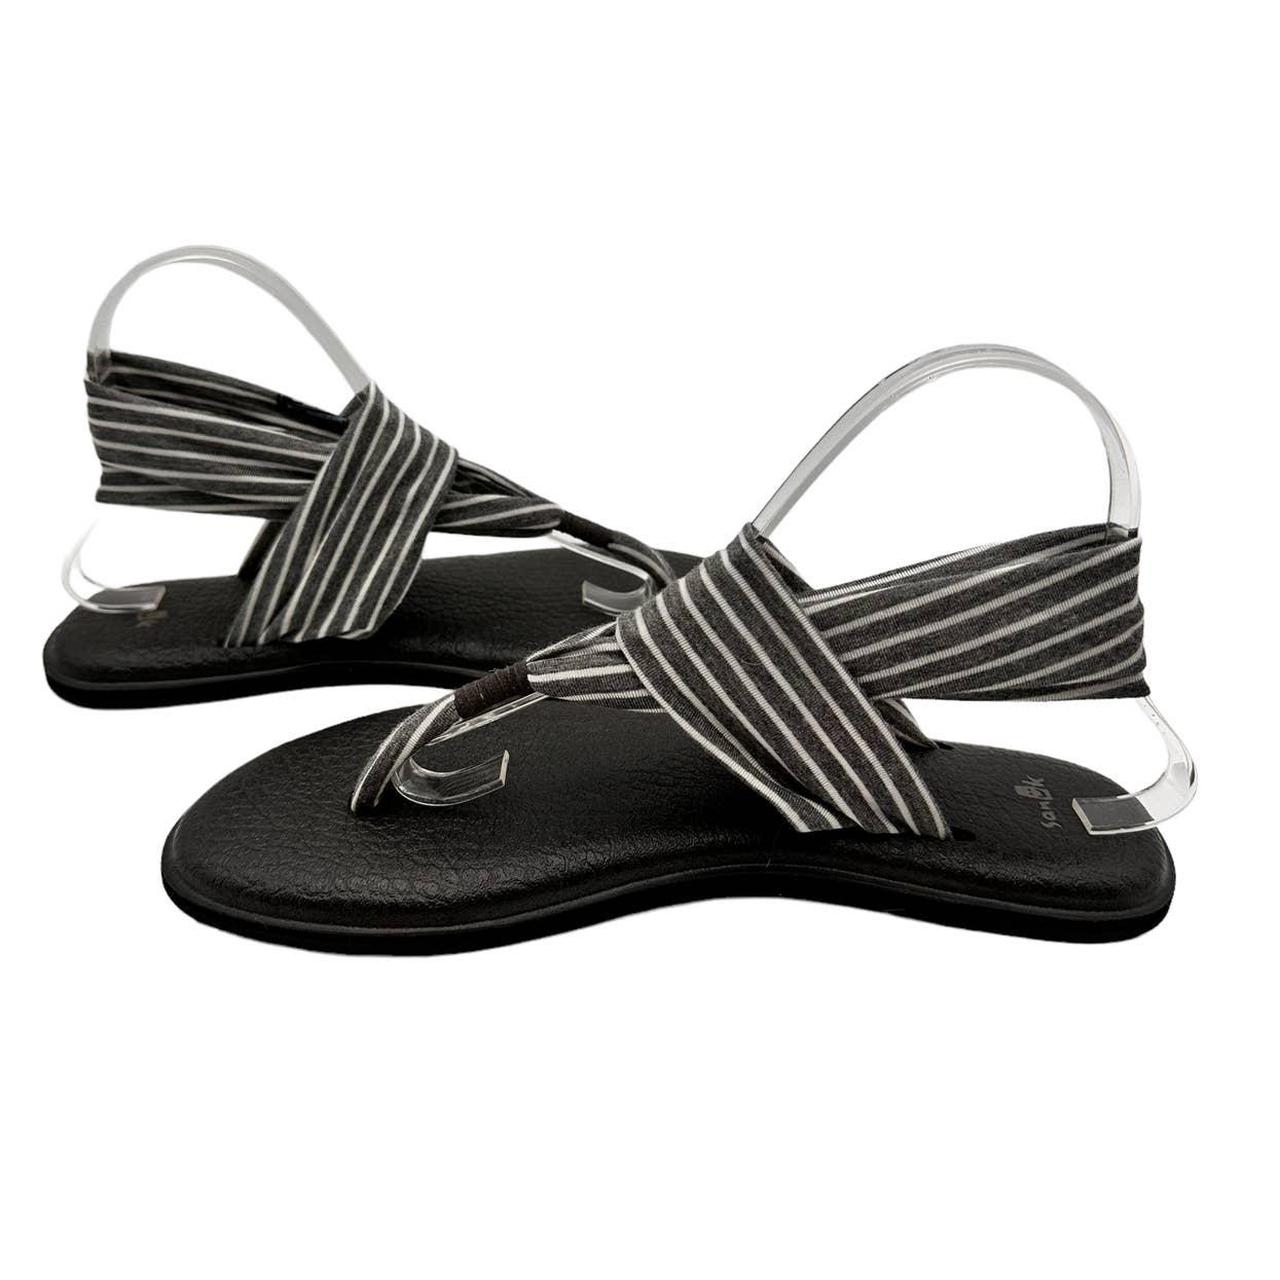 Sanuk Yoga Sandals Black & White Striped Fabric size - Depop